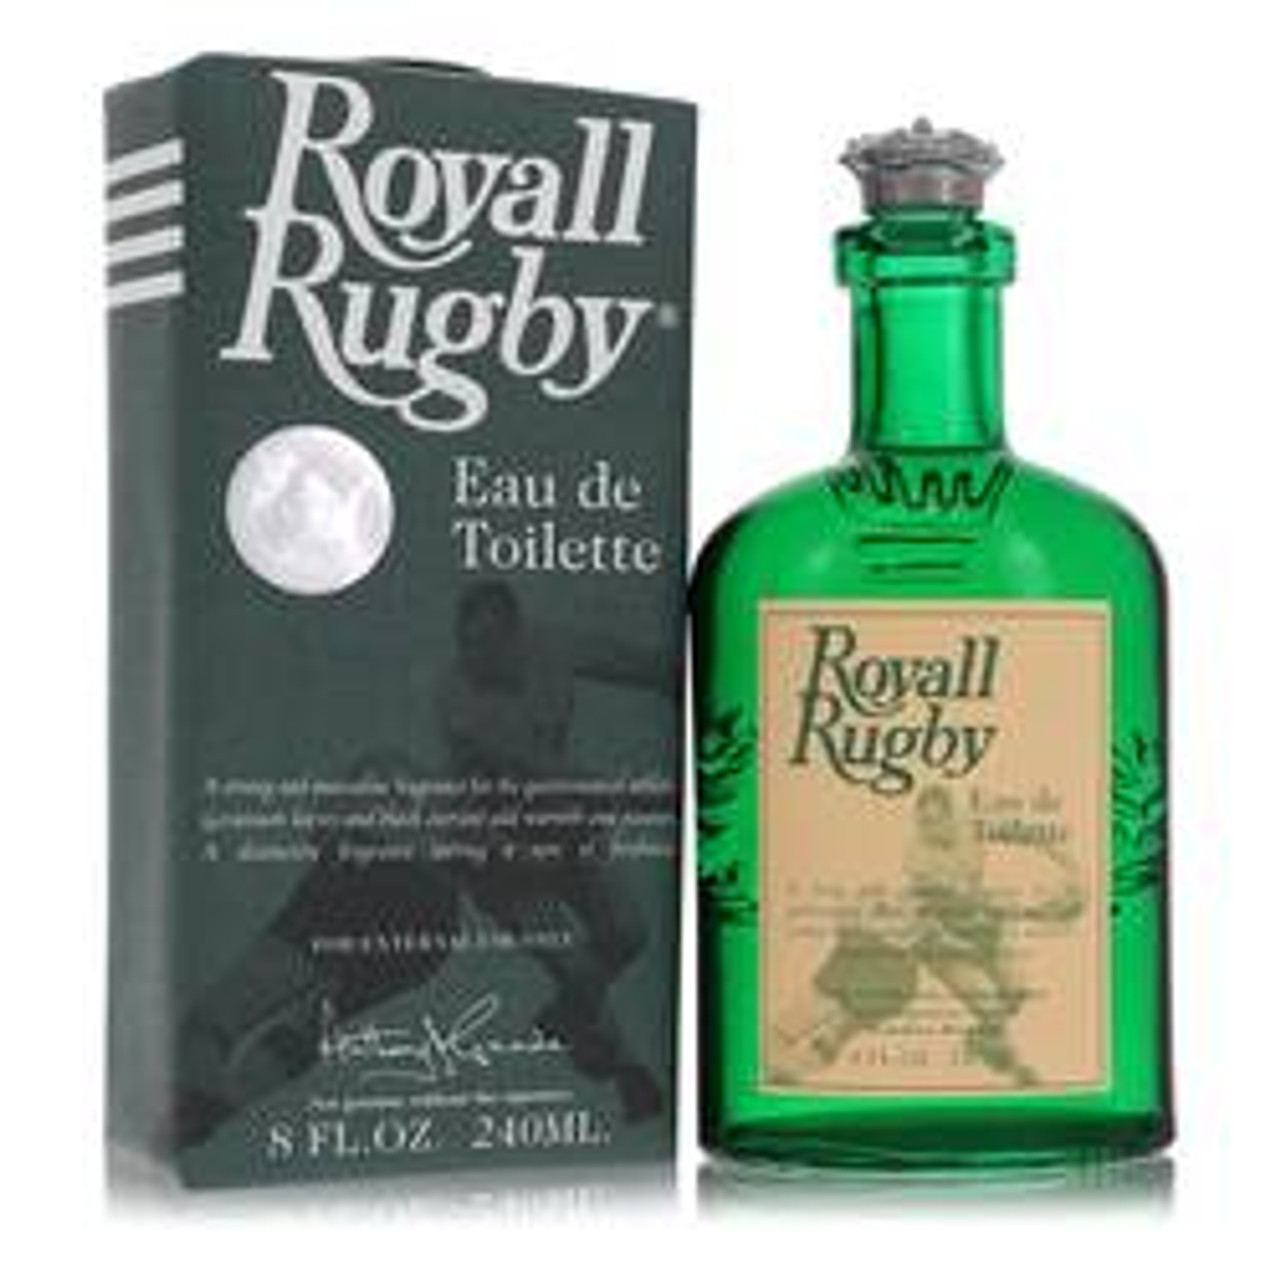 Royall Rugby Cologne By Royall Fragrances Eau De Toilette 8 oz for Men - *Pre-Order